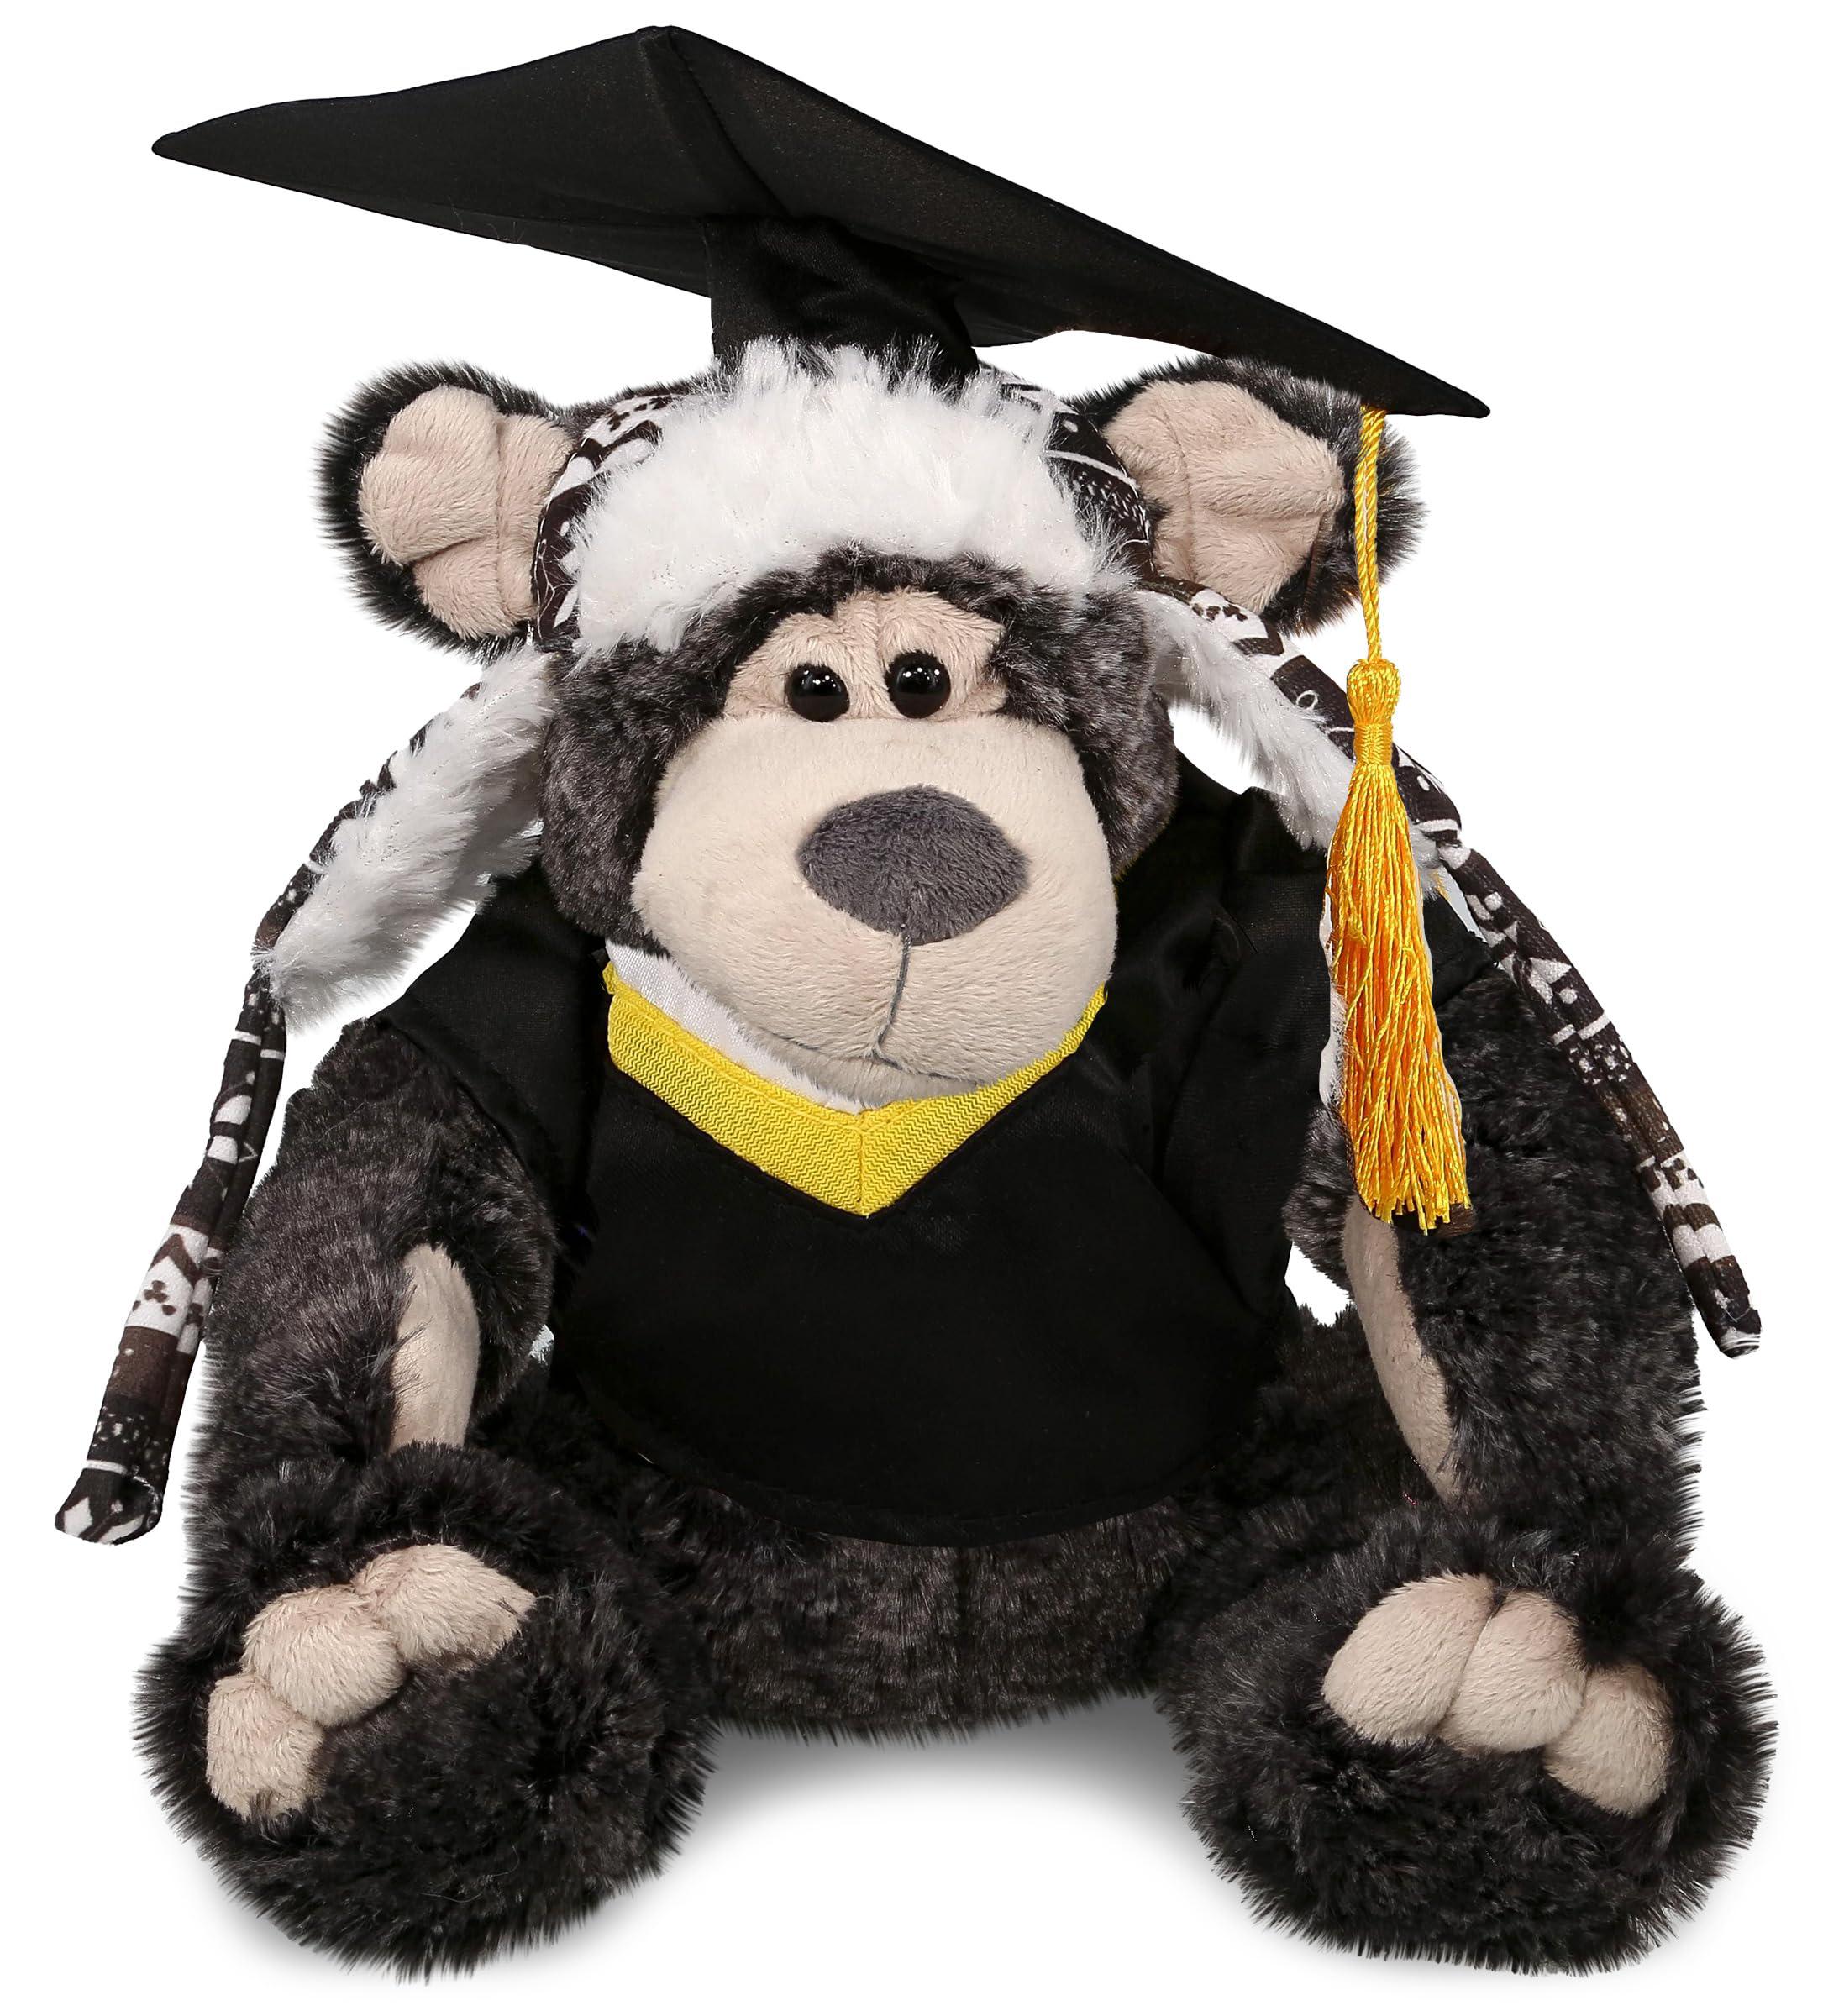 dollibu black bear graduation plush toy - super soft plush graduation stuffed animal dress up with gown & cap with tassel out